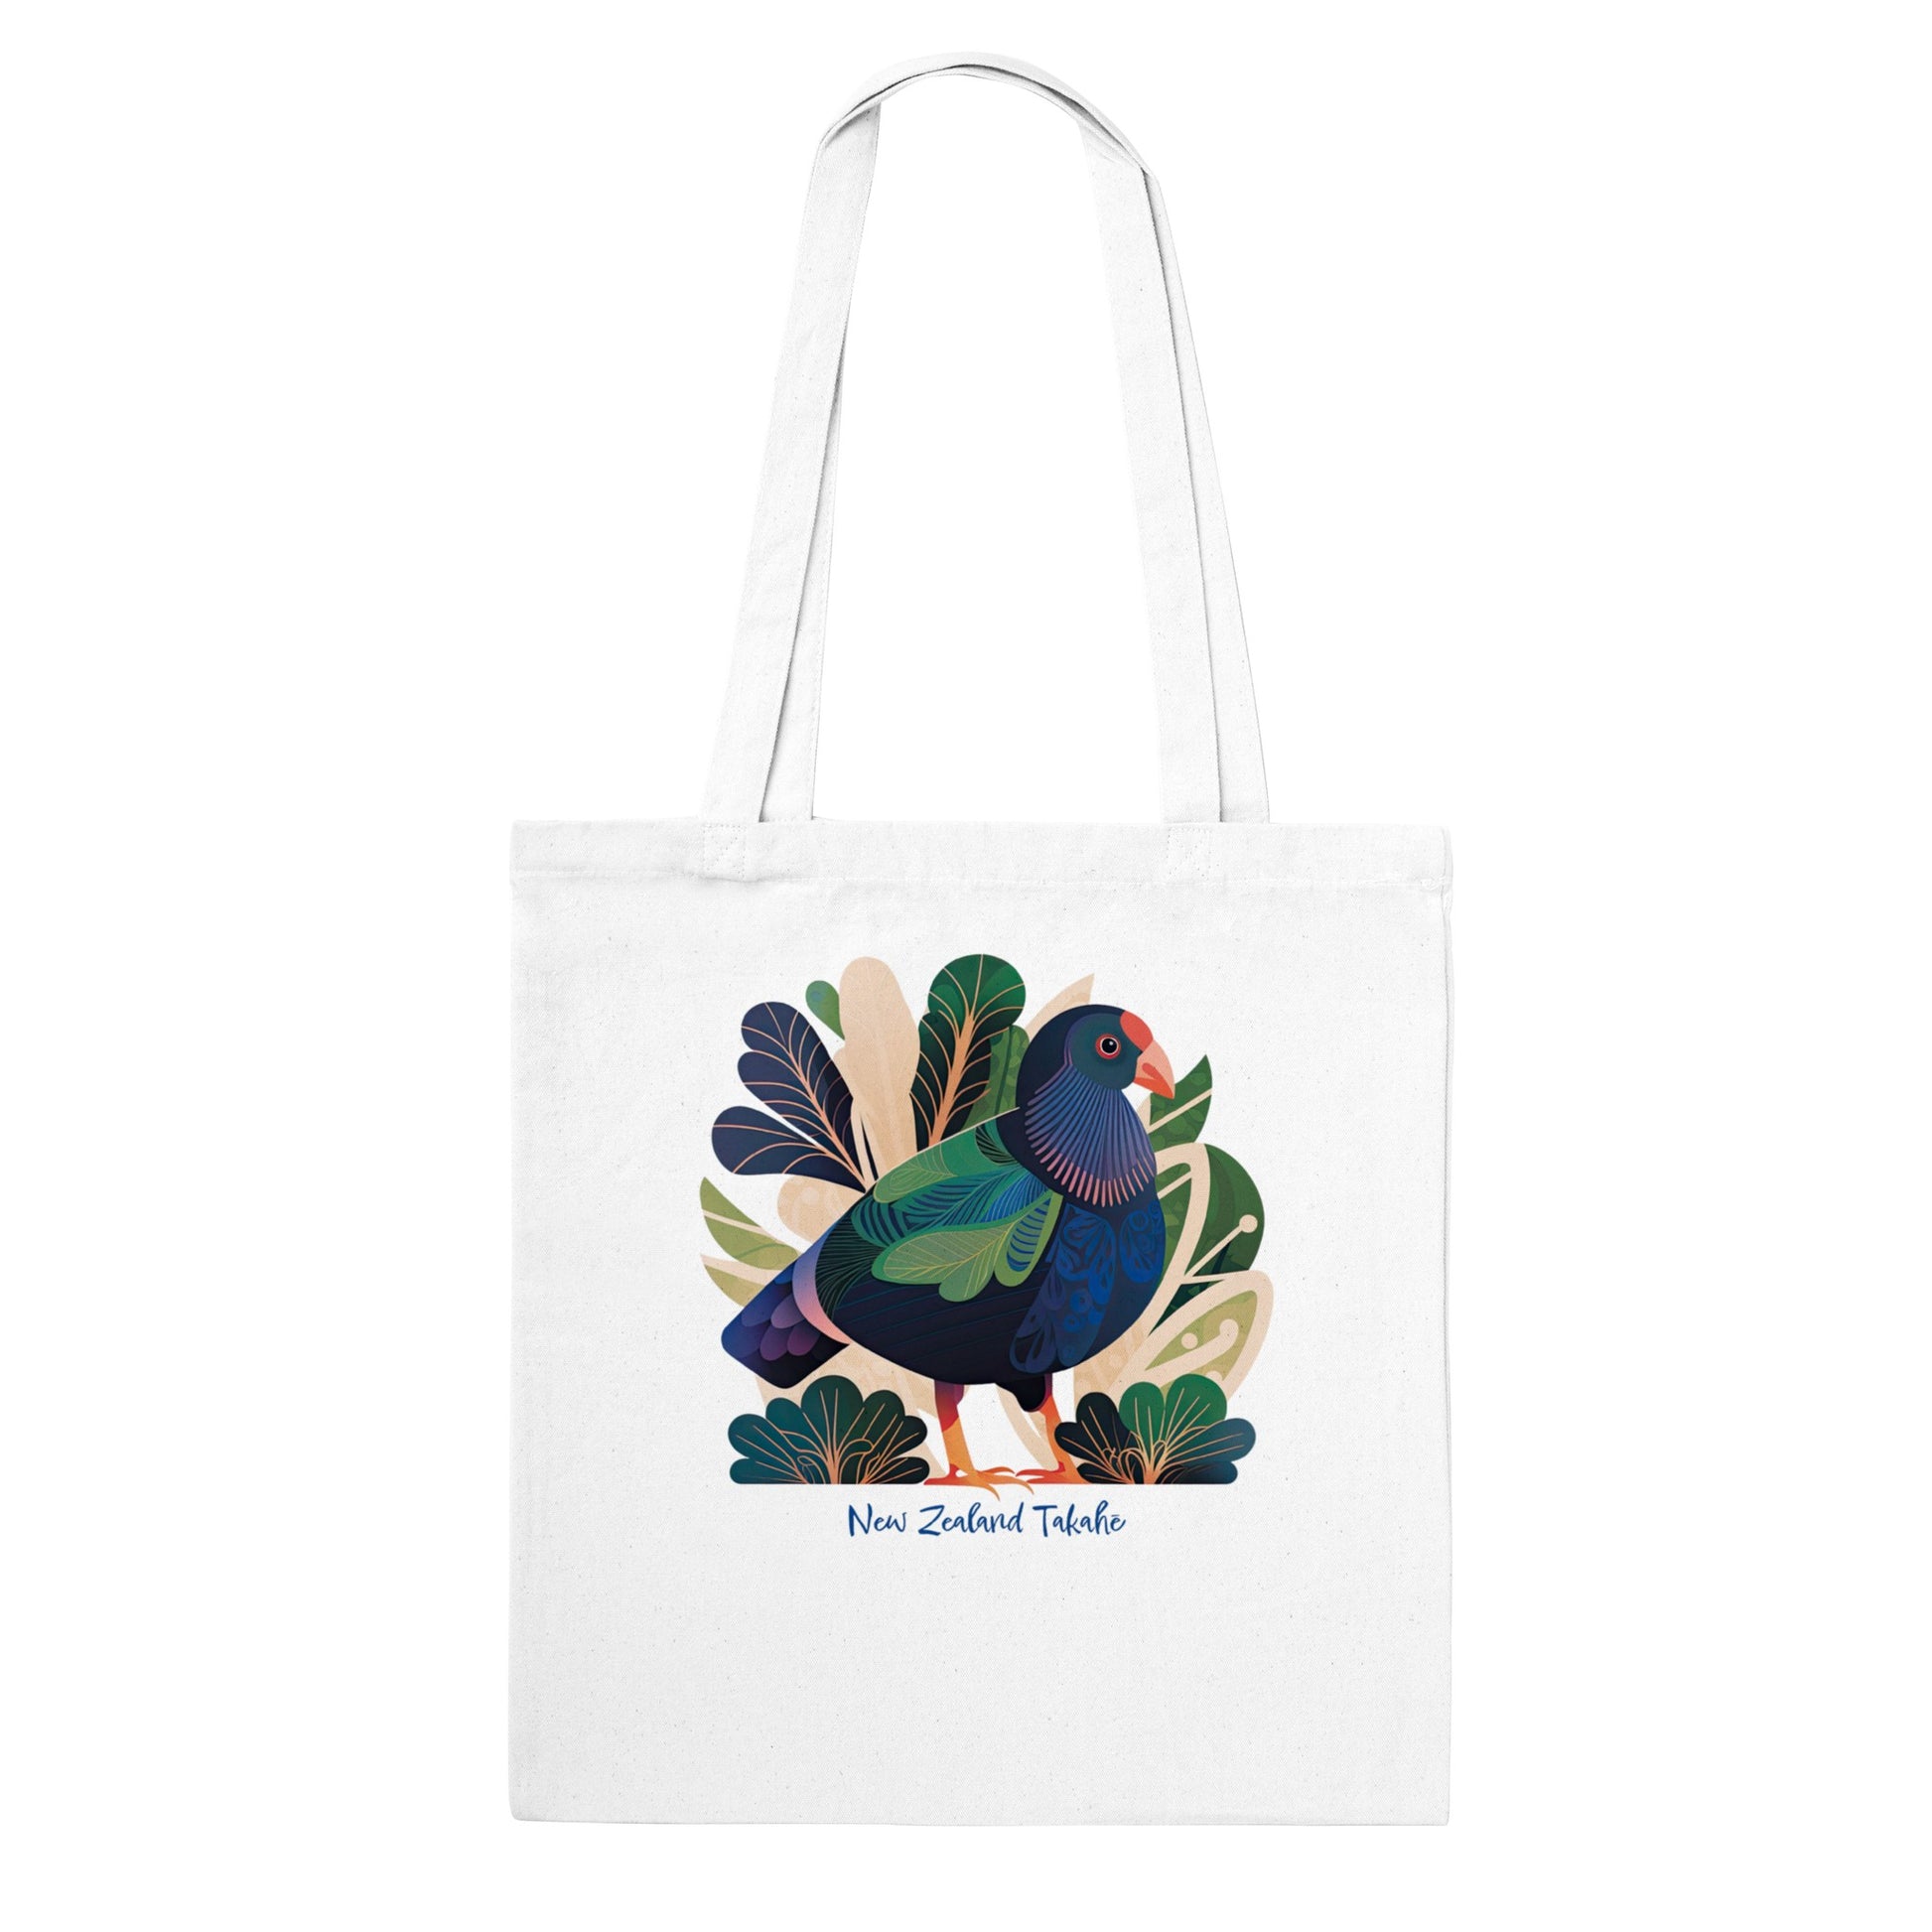 White tote bag with a New Zealand Takahe bird print